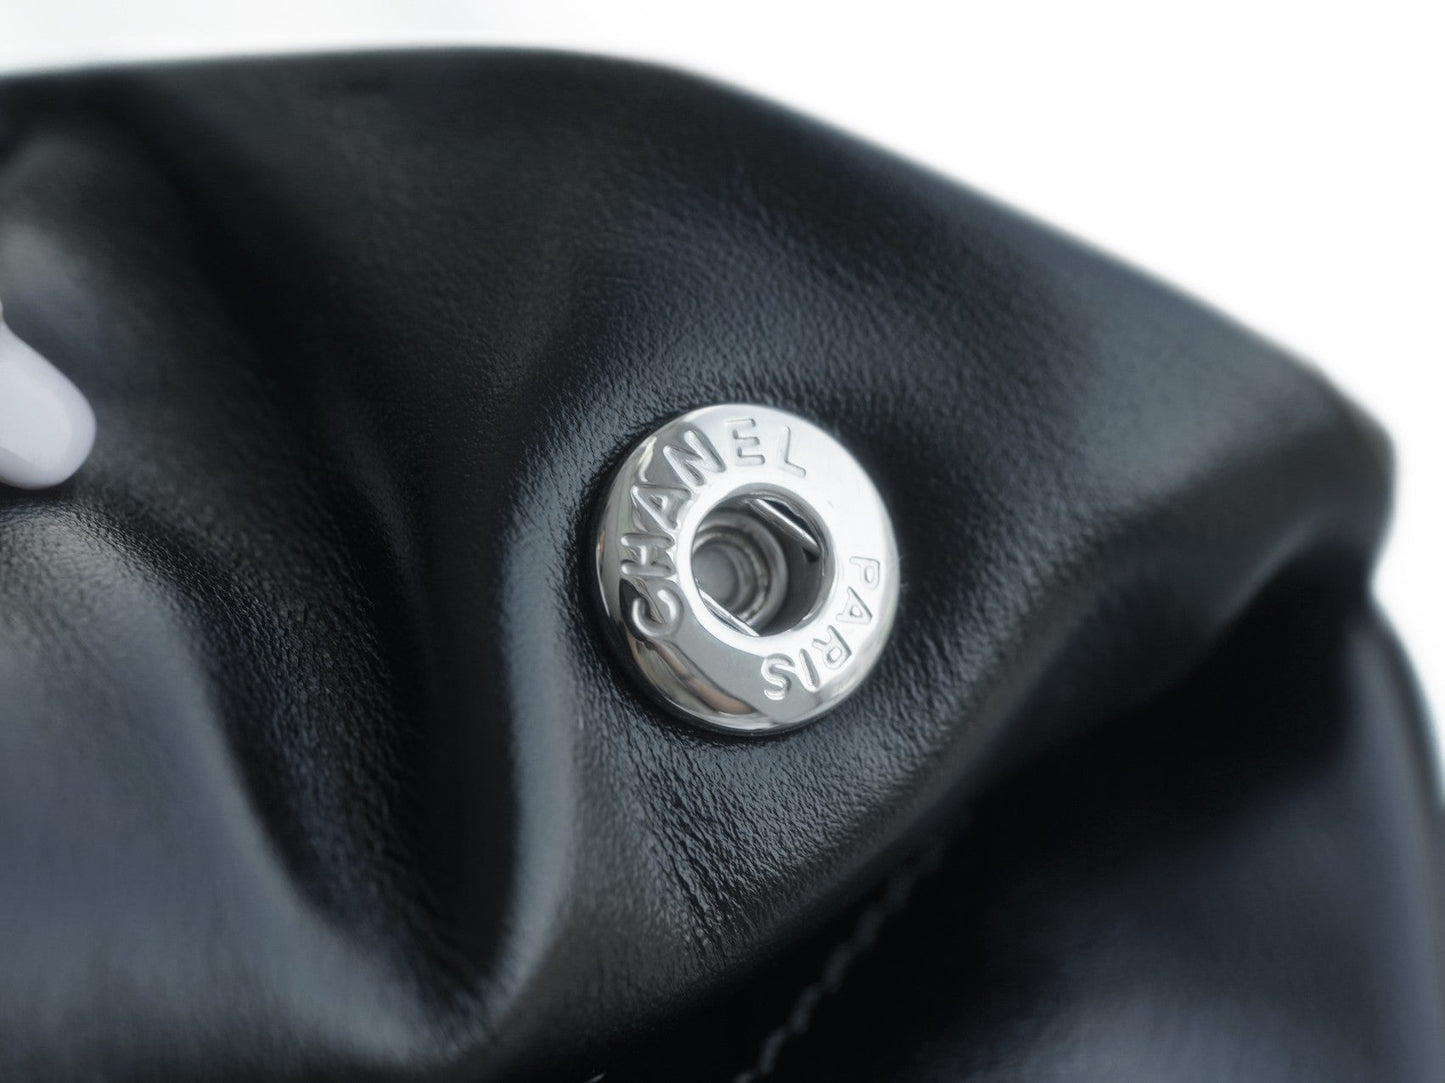 𝗖𝗛𝗔𝗡𝗘𝗟✦𝟐𝟐𝗣 Advanced Handcraft Workshop 𝟐𝟐 Handbag Genuine Leather Large Black Silver - Rachellebags